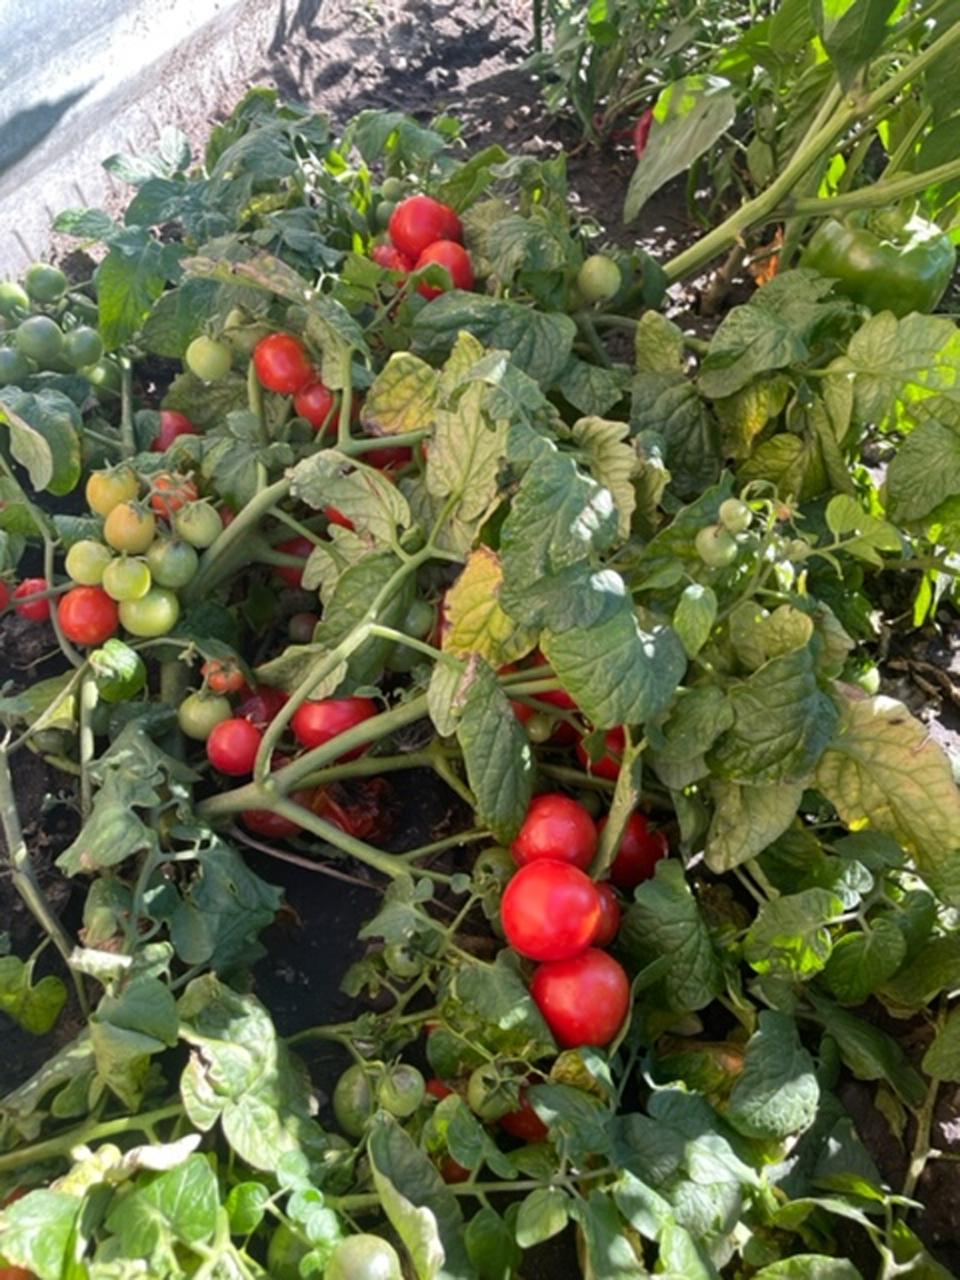 CJES garden Tomatoes